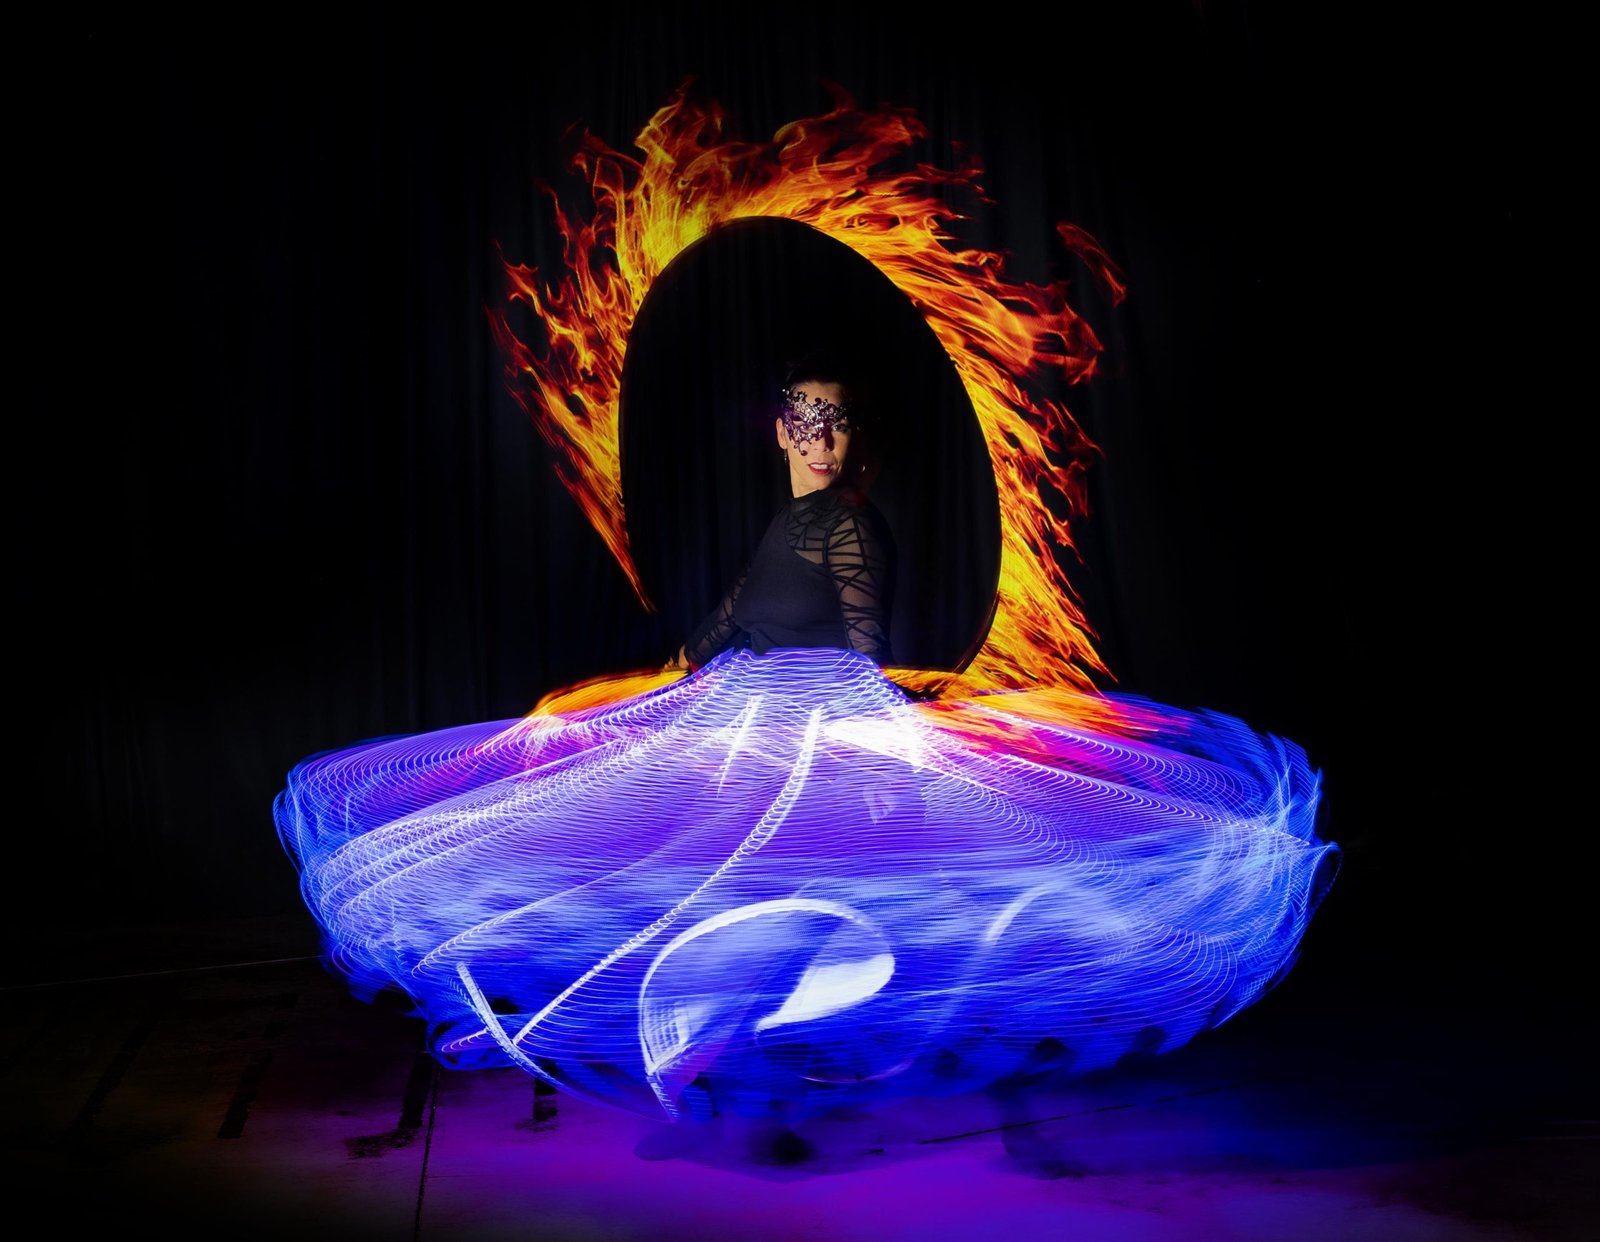 LED skirt dancer in French LED performance show "Astrea"